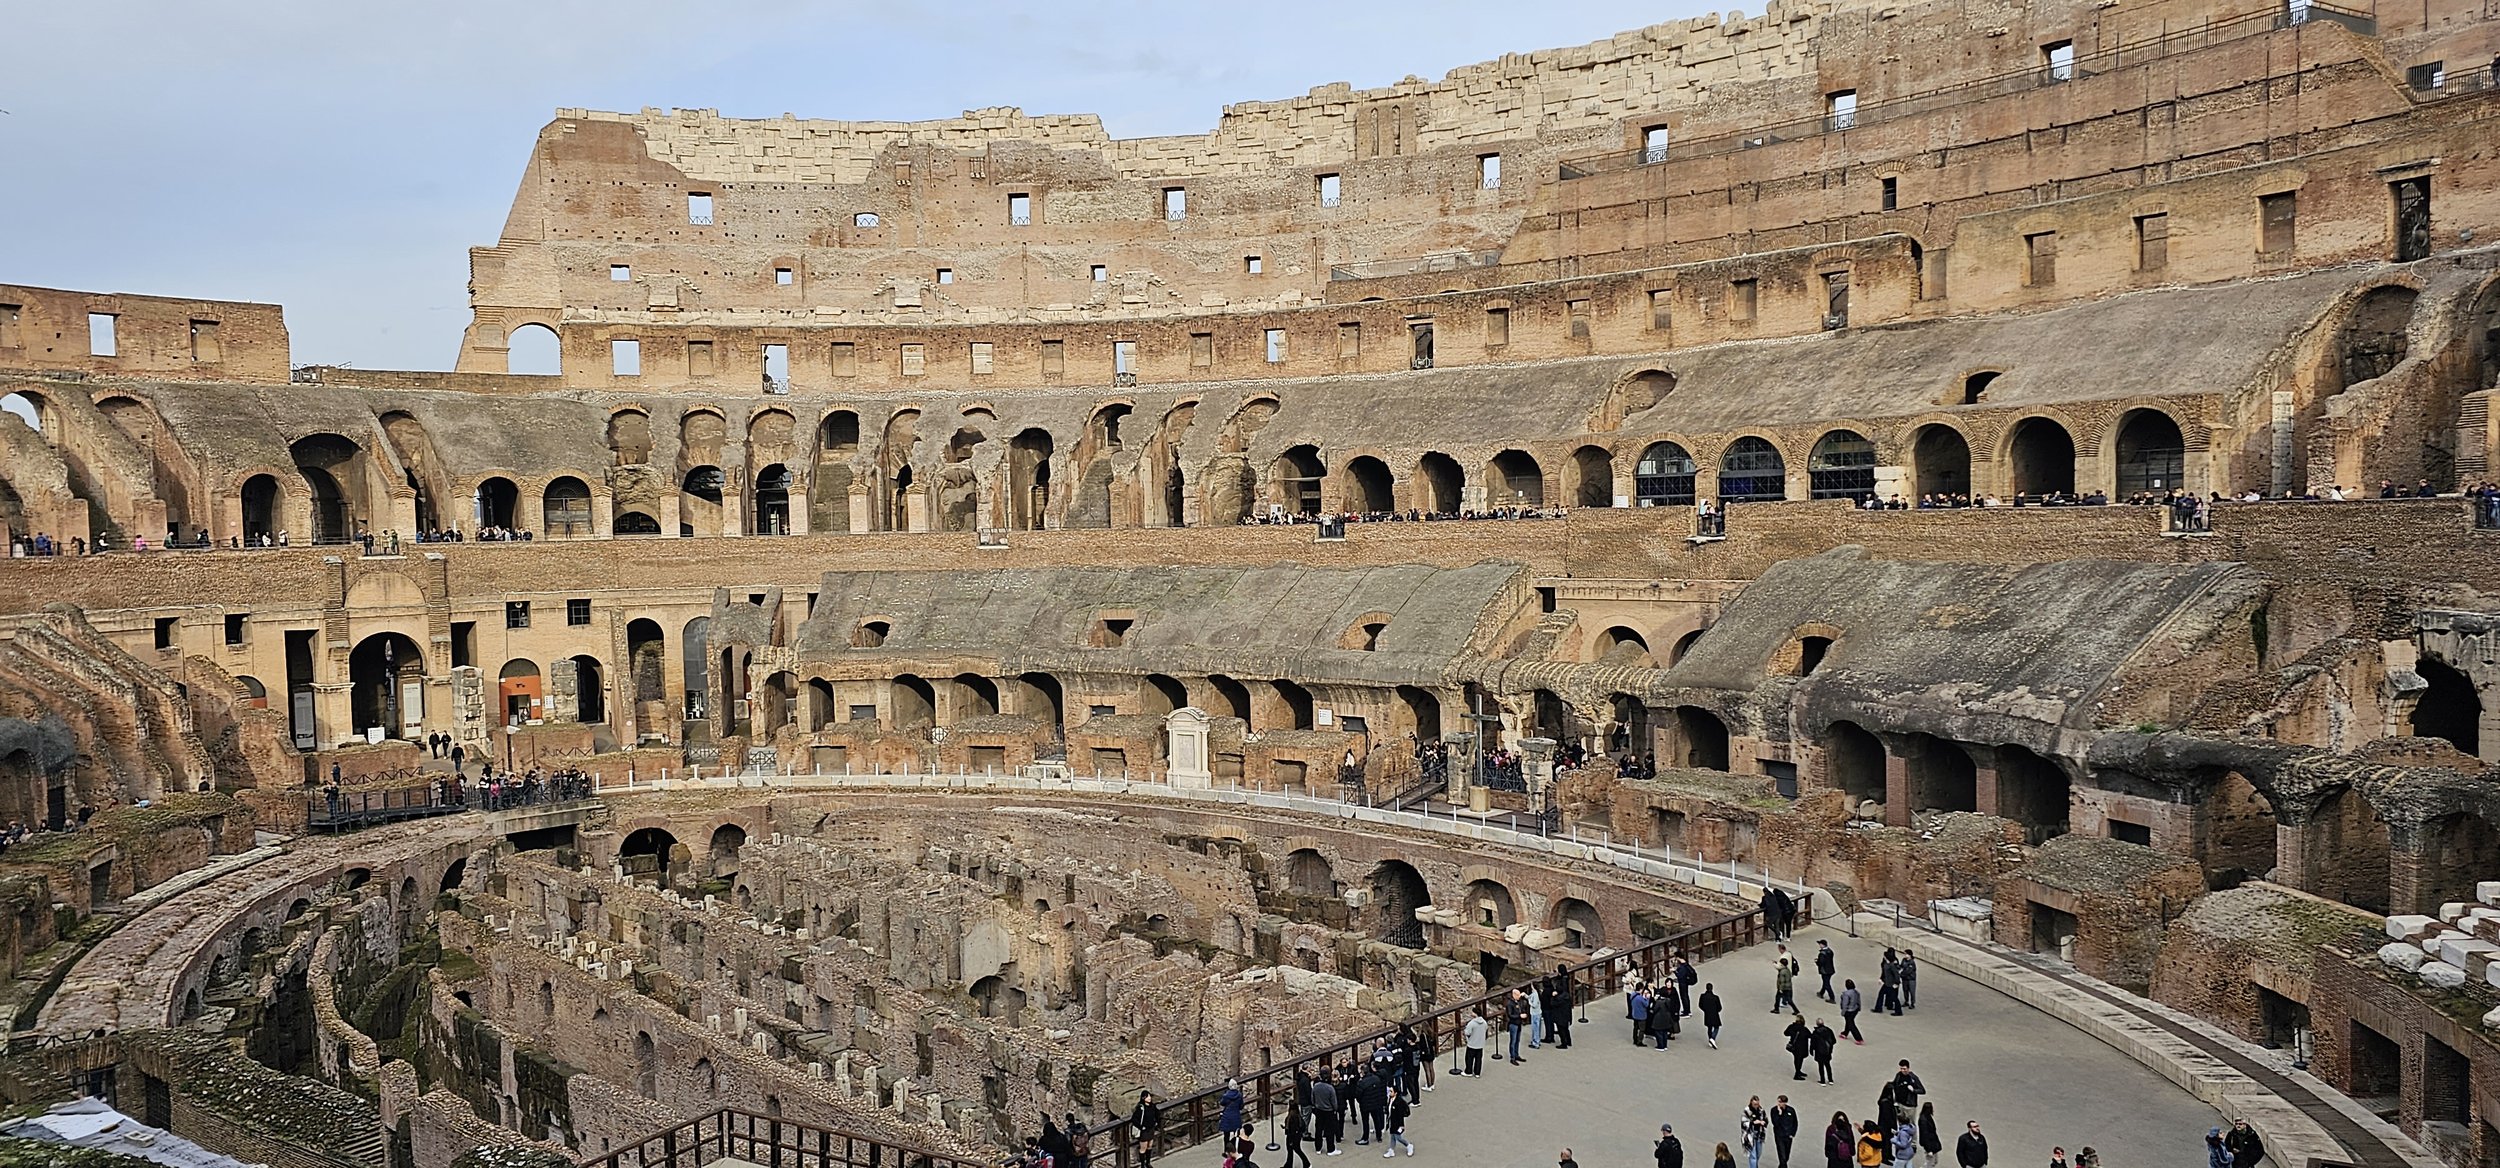 Panaramic View of the Colosseum